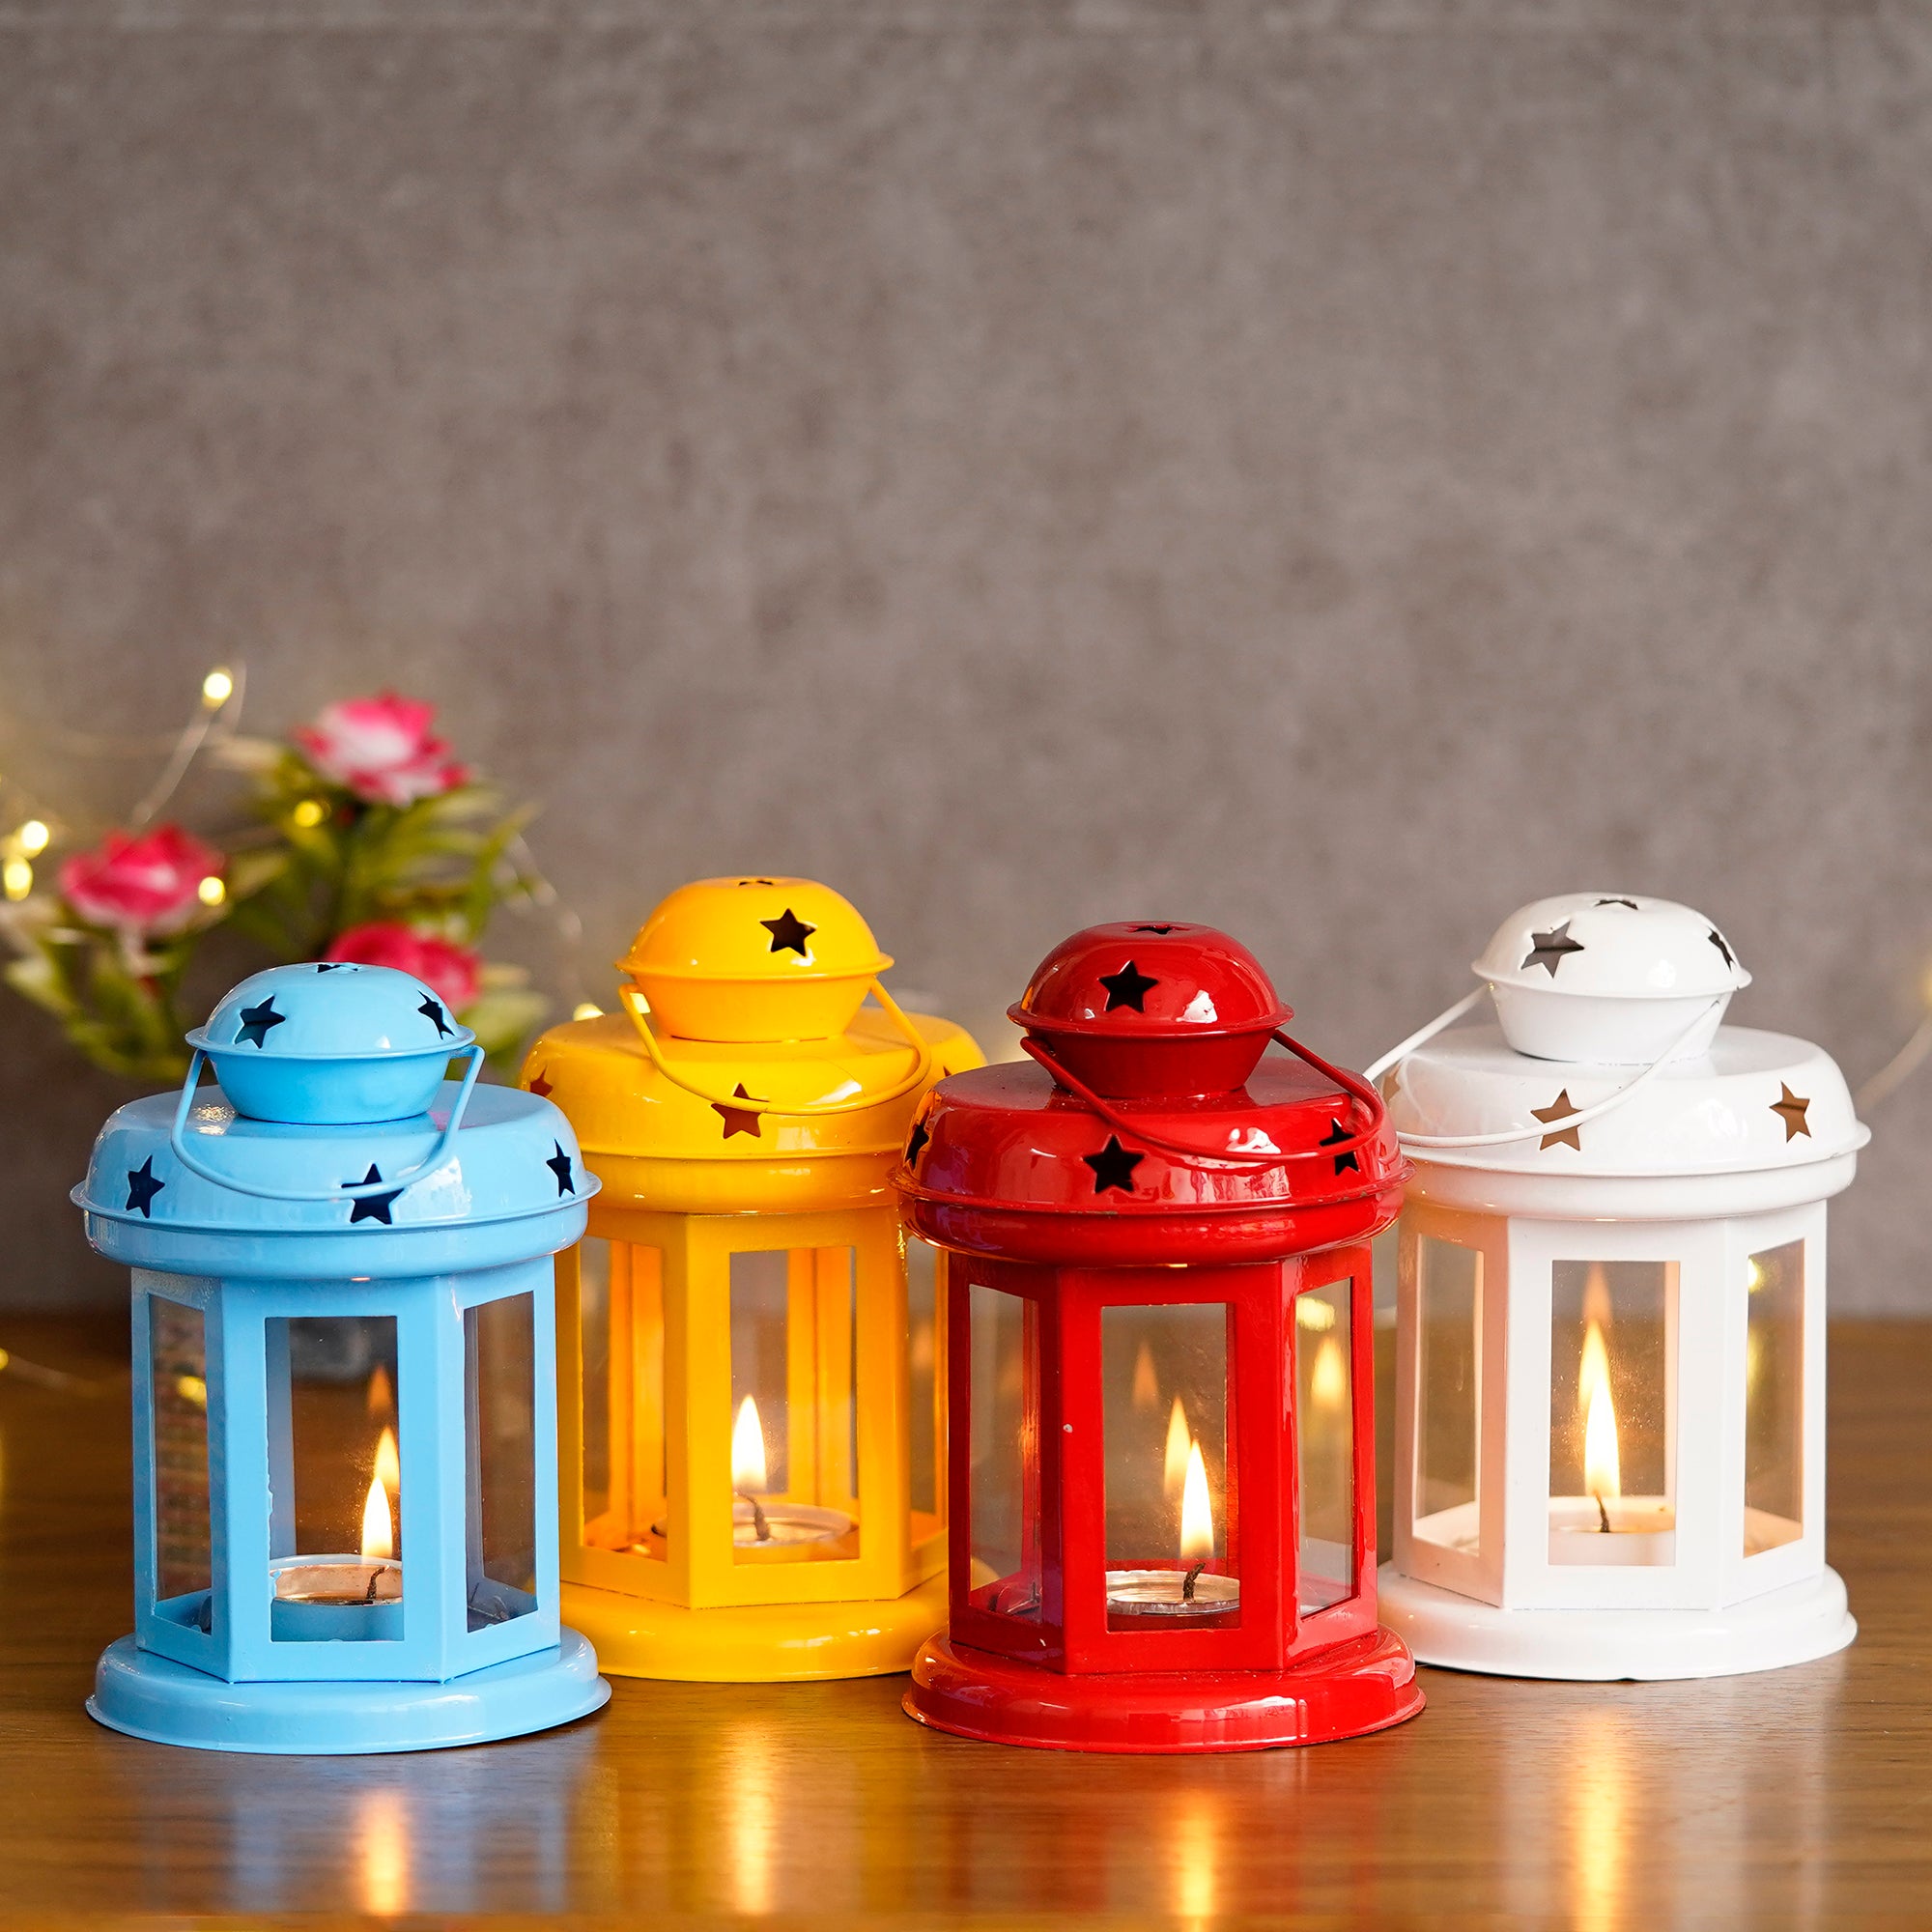 Iron Set of 4 tea light candle holder Lantern(Blue, Yellow, Red, White)